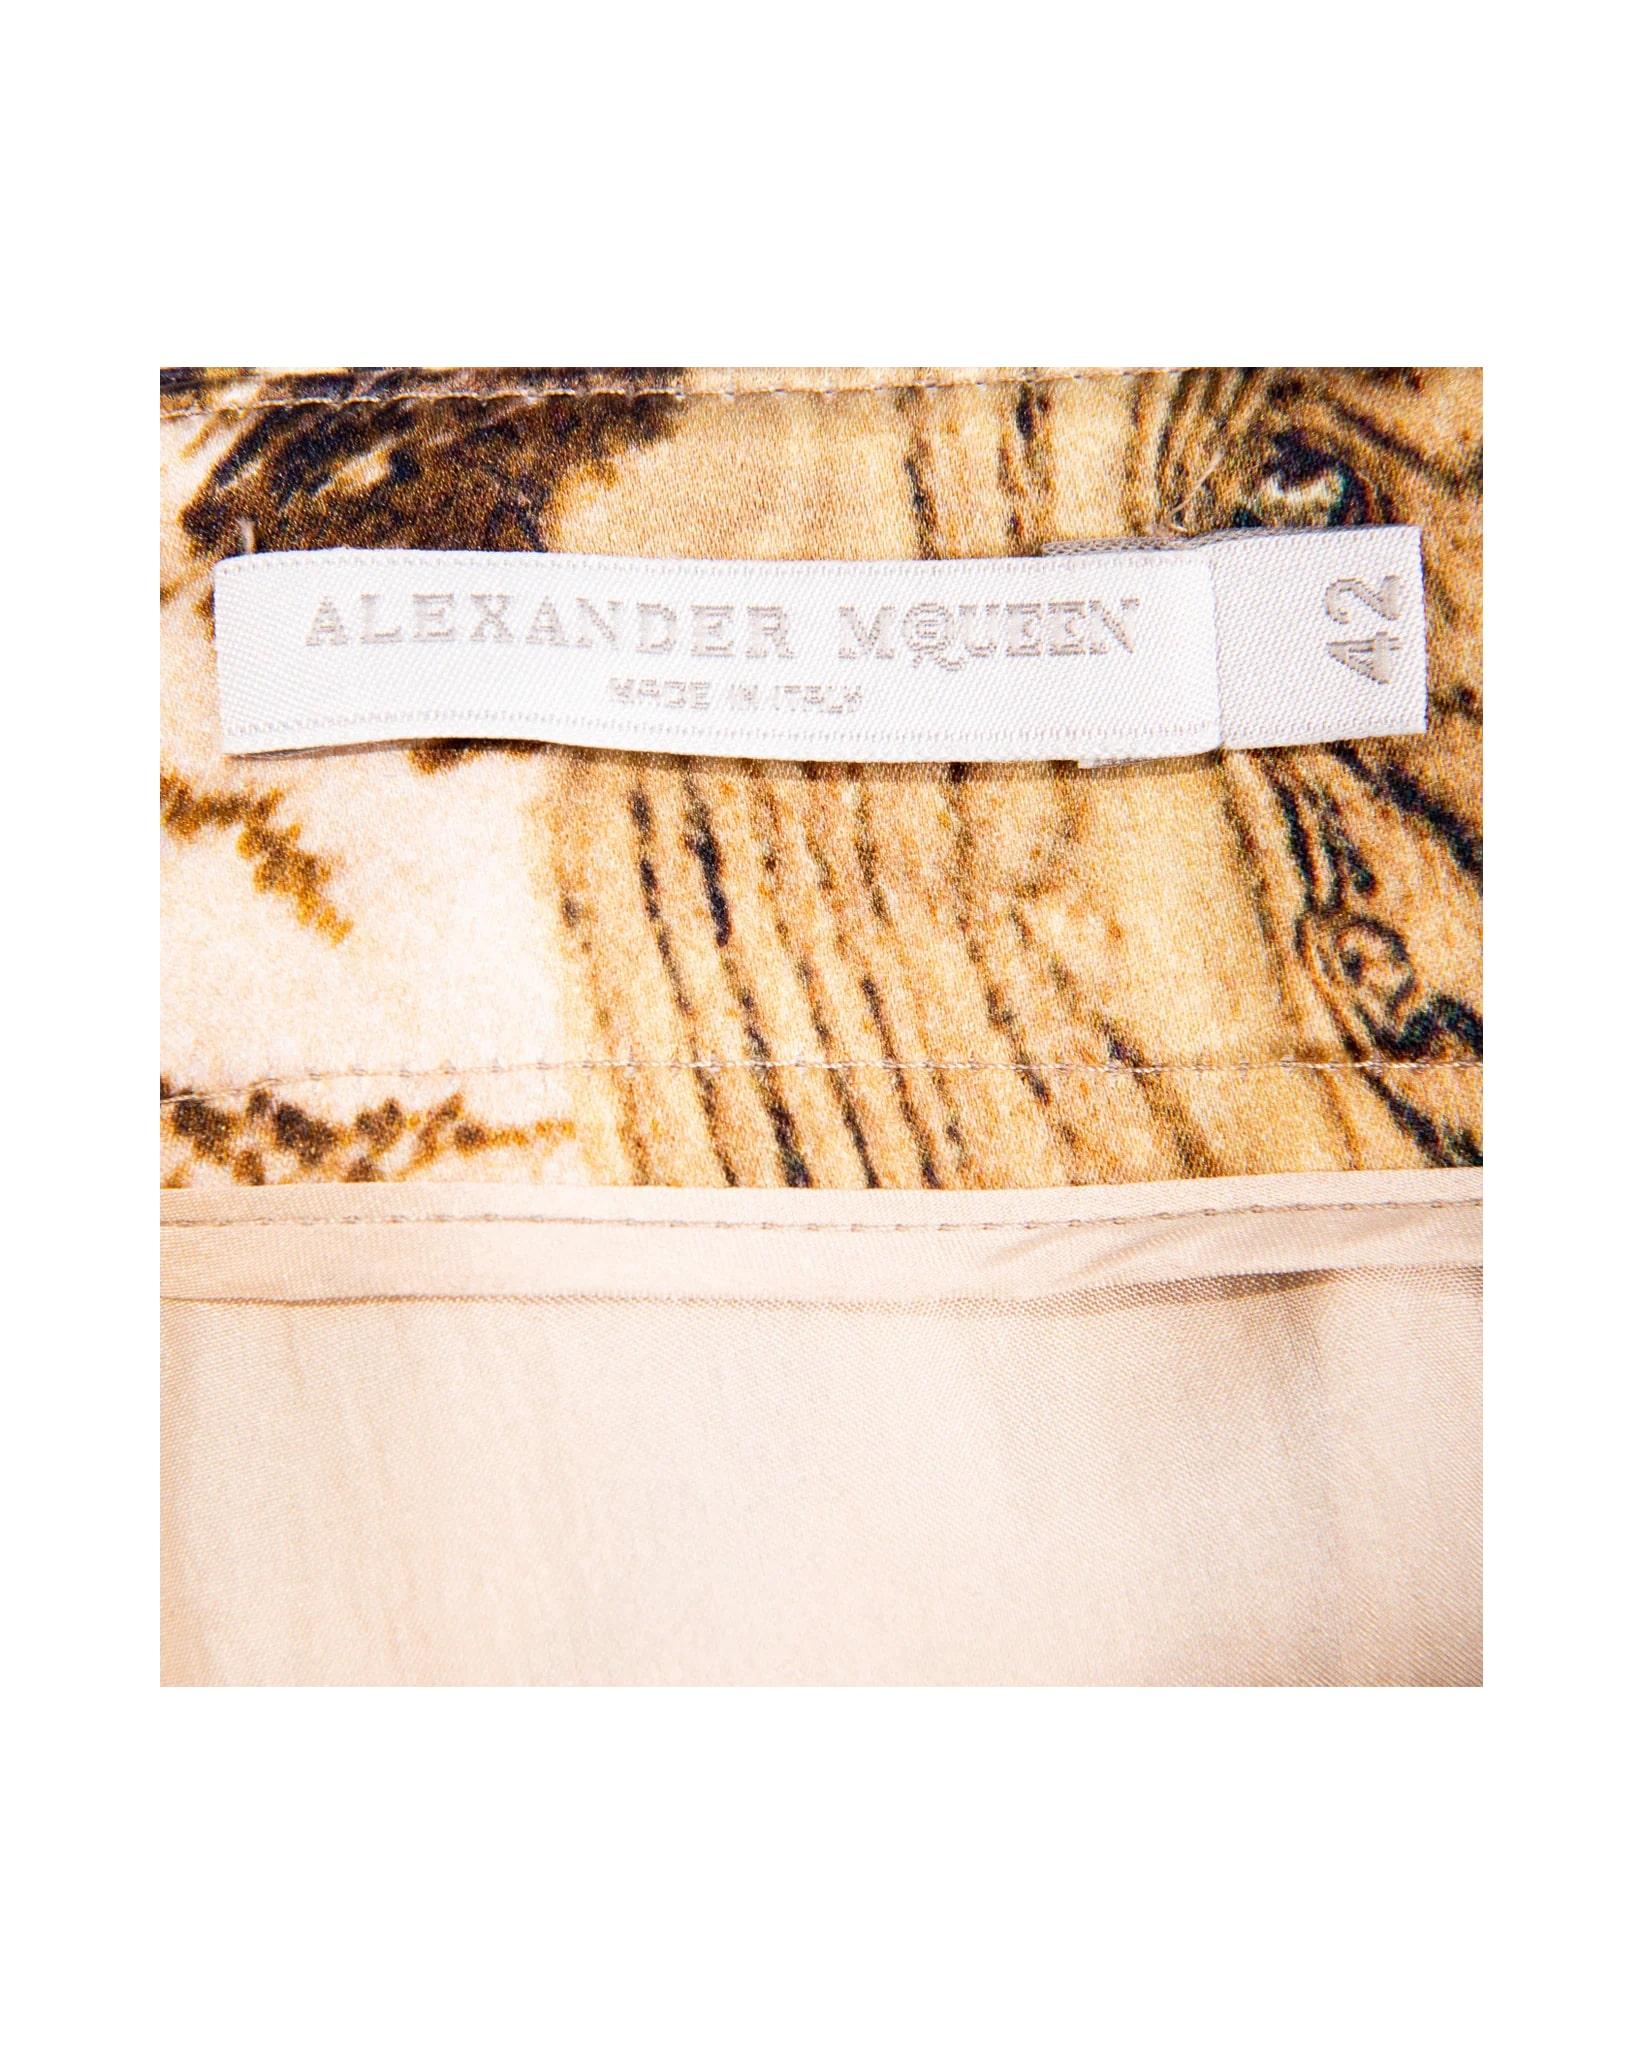 S/S 2009 Alexander McQueen Wood Monarch Print Trousers 3